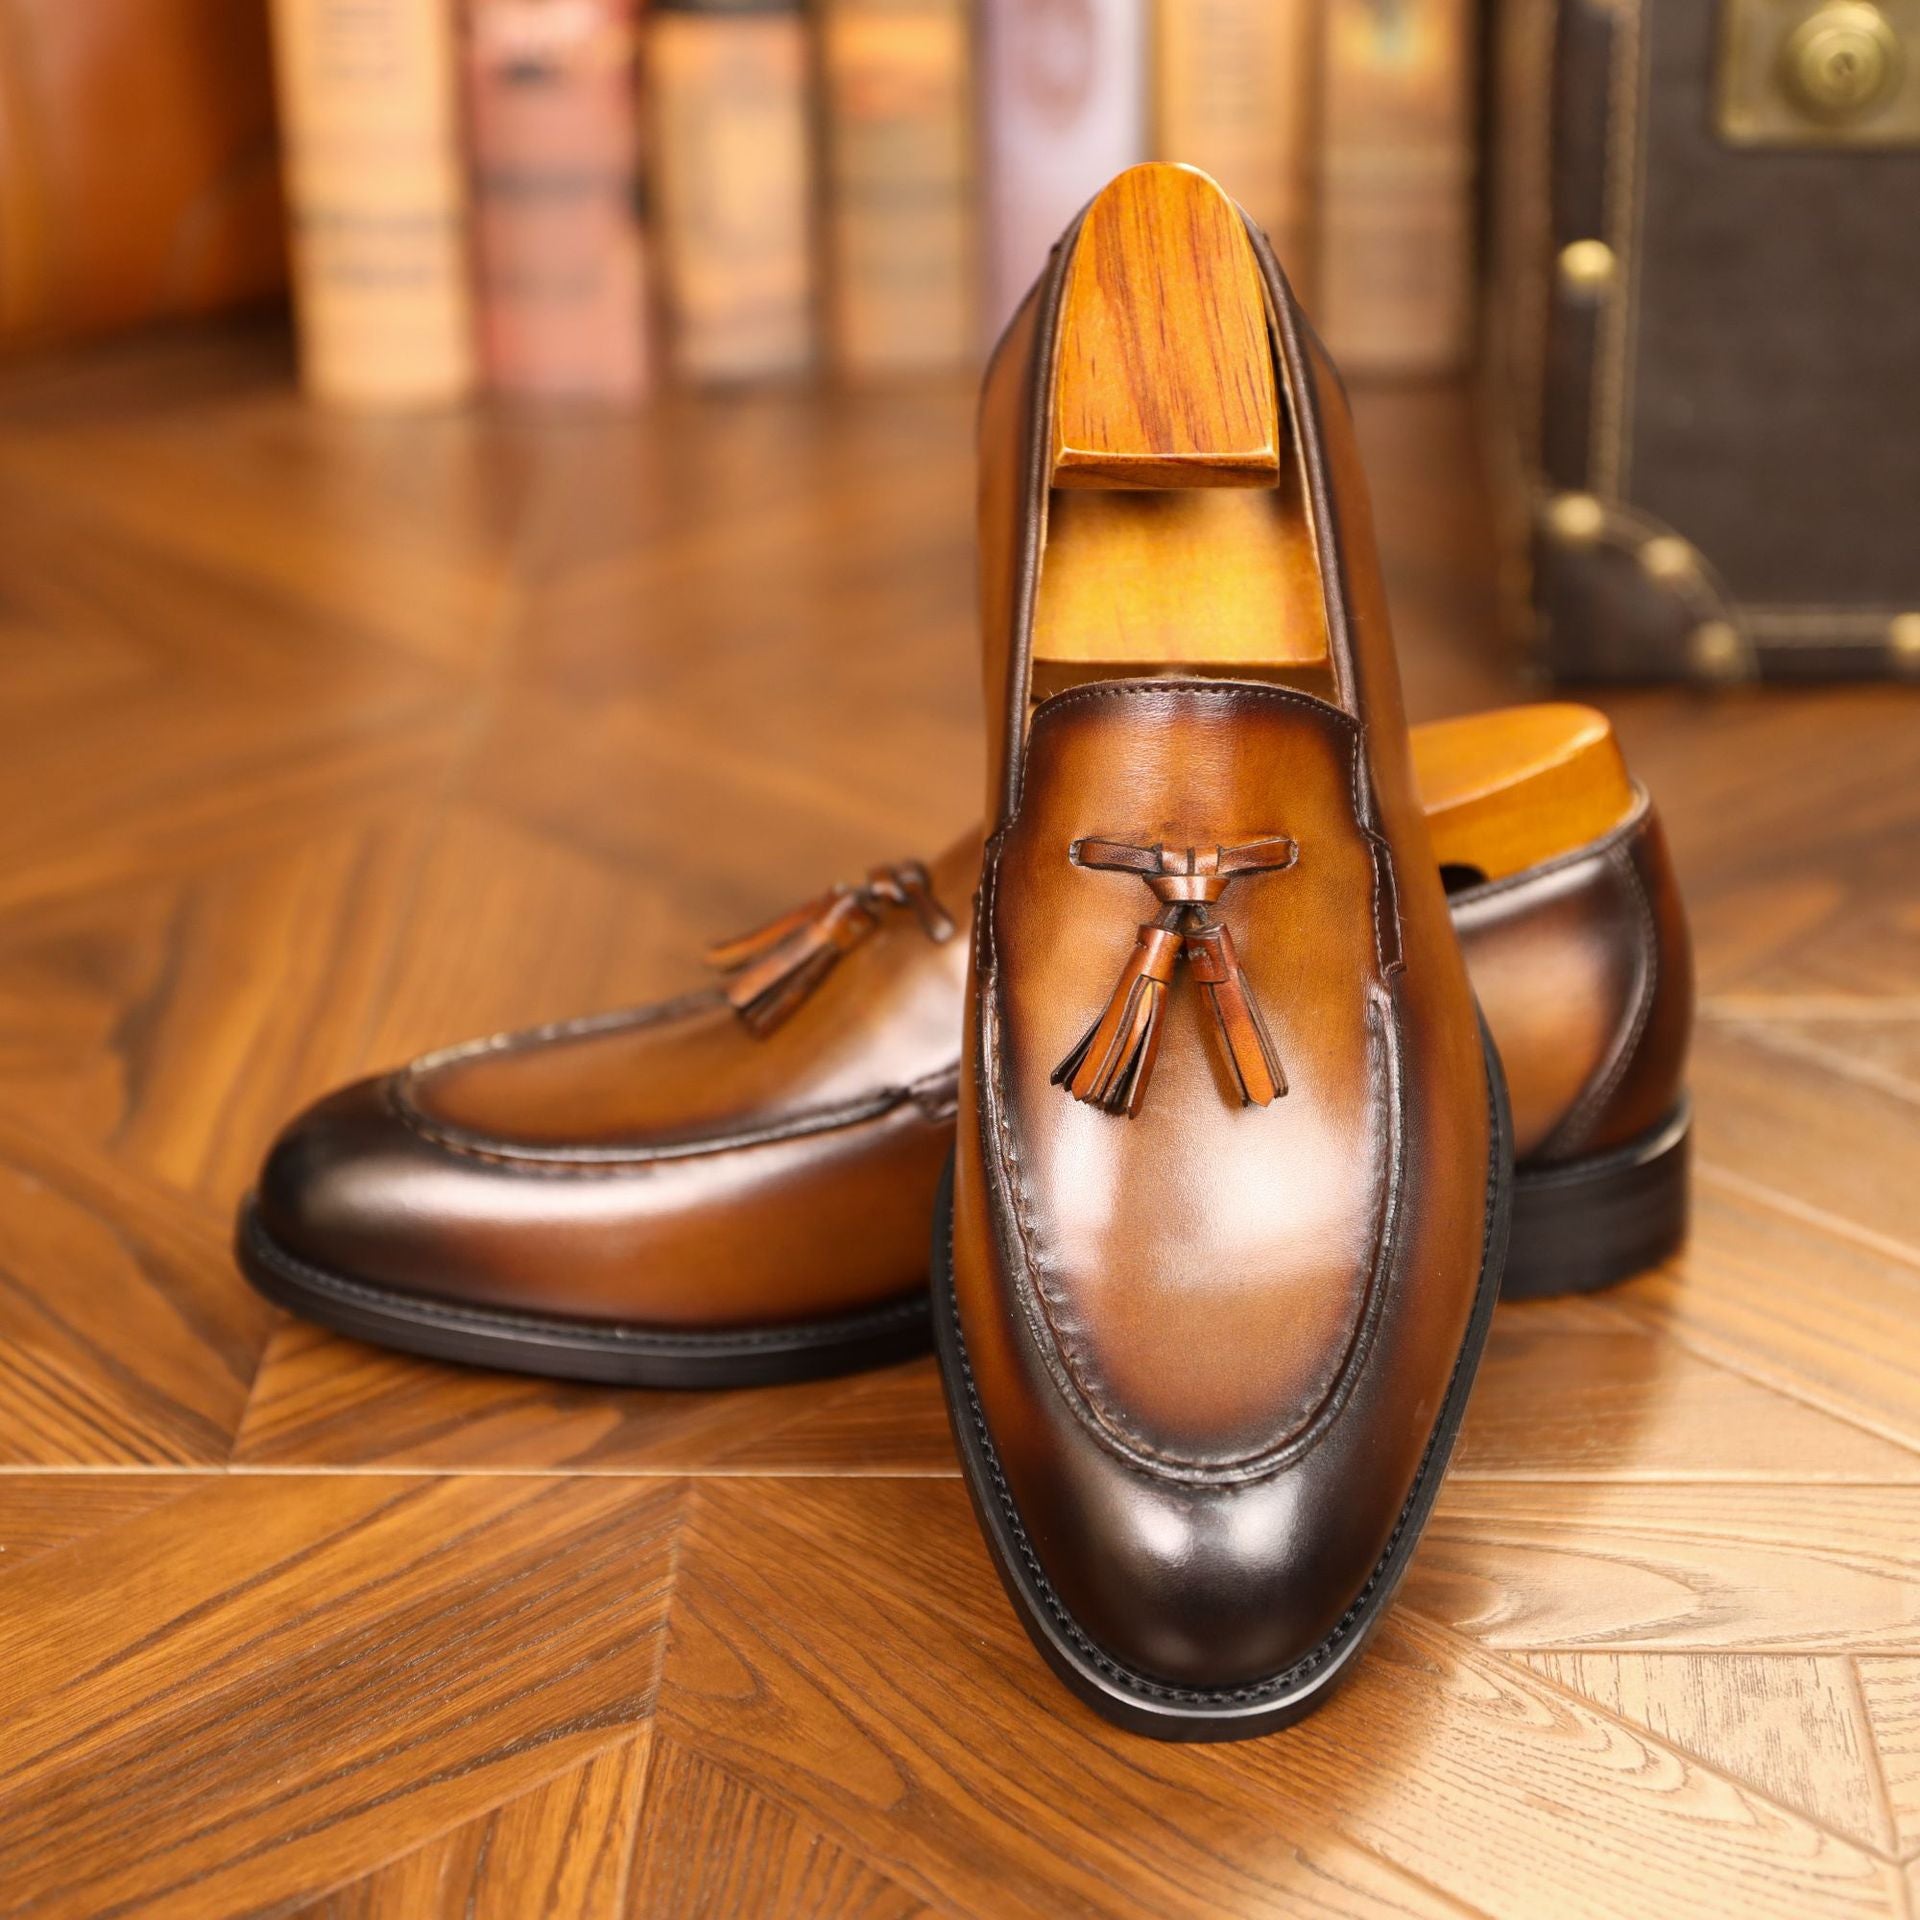 Men's Tassel British Business Slip-on Extra Large Loafers